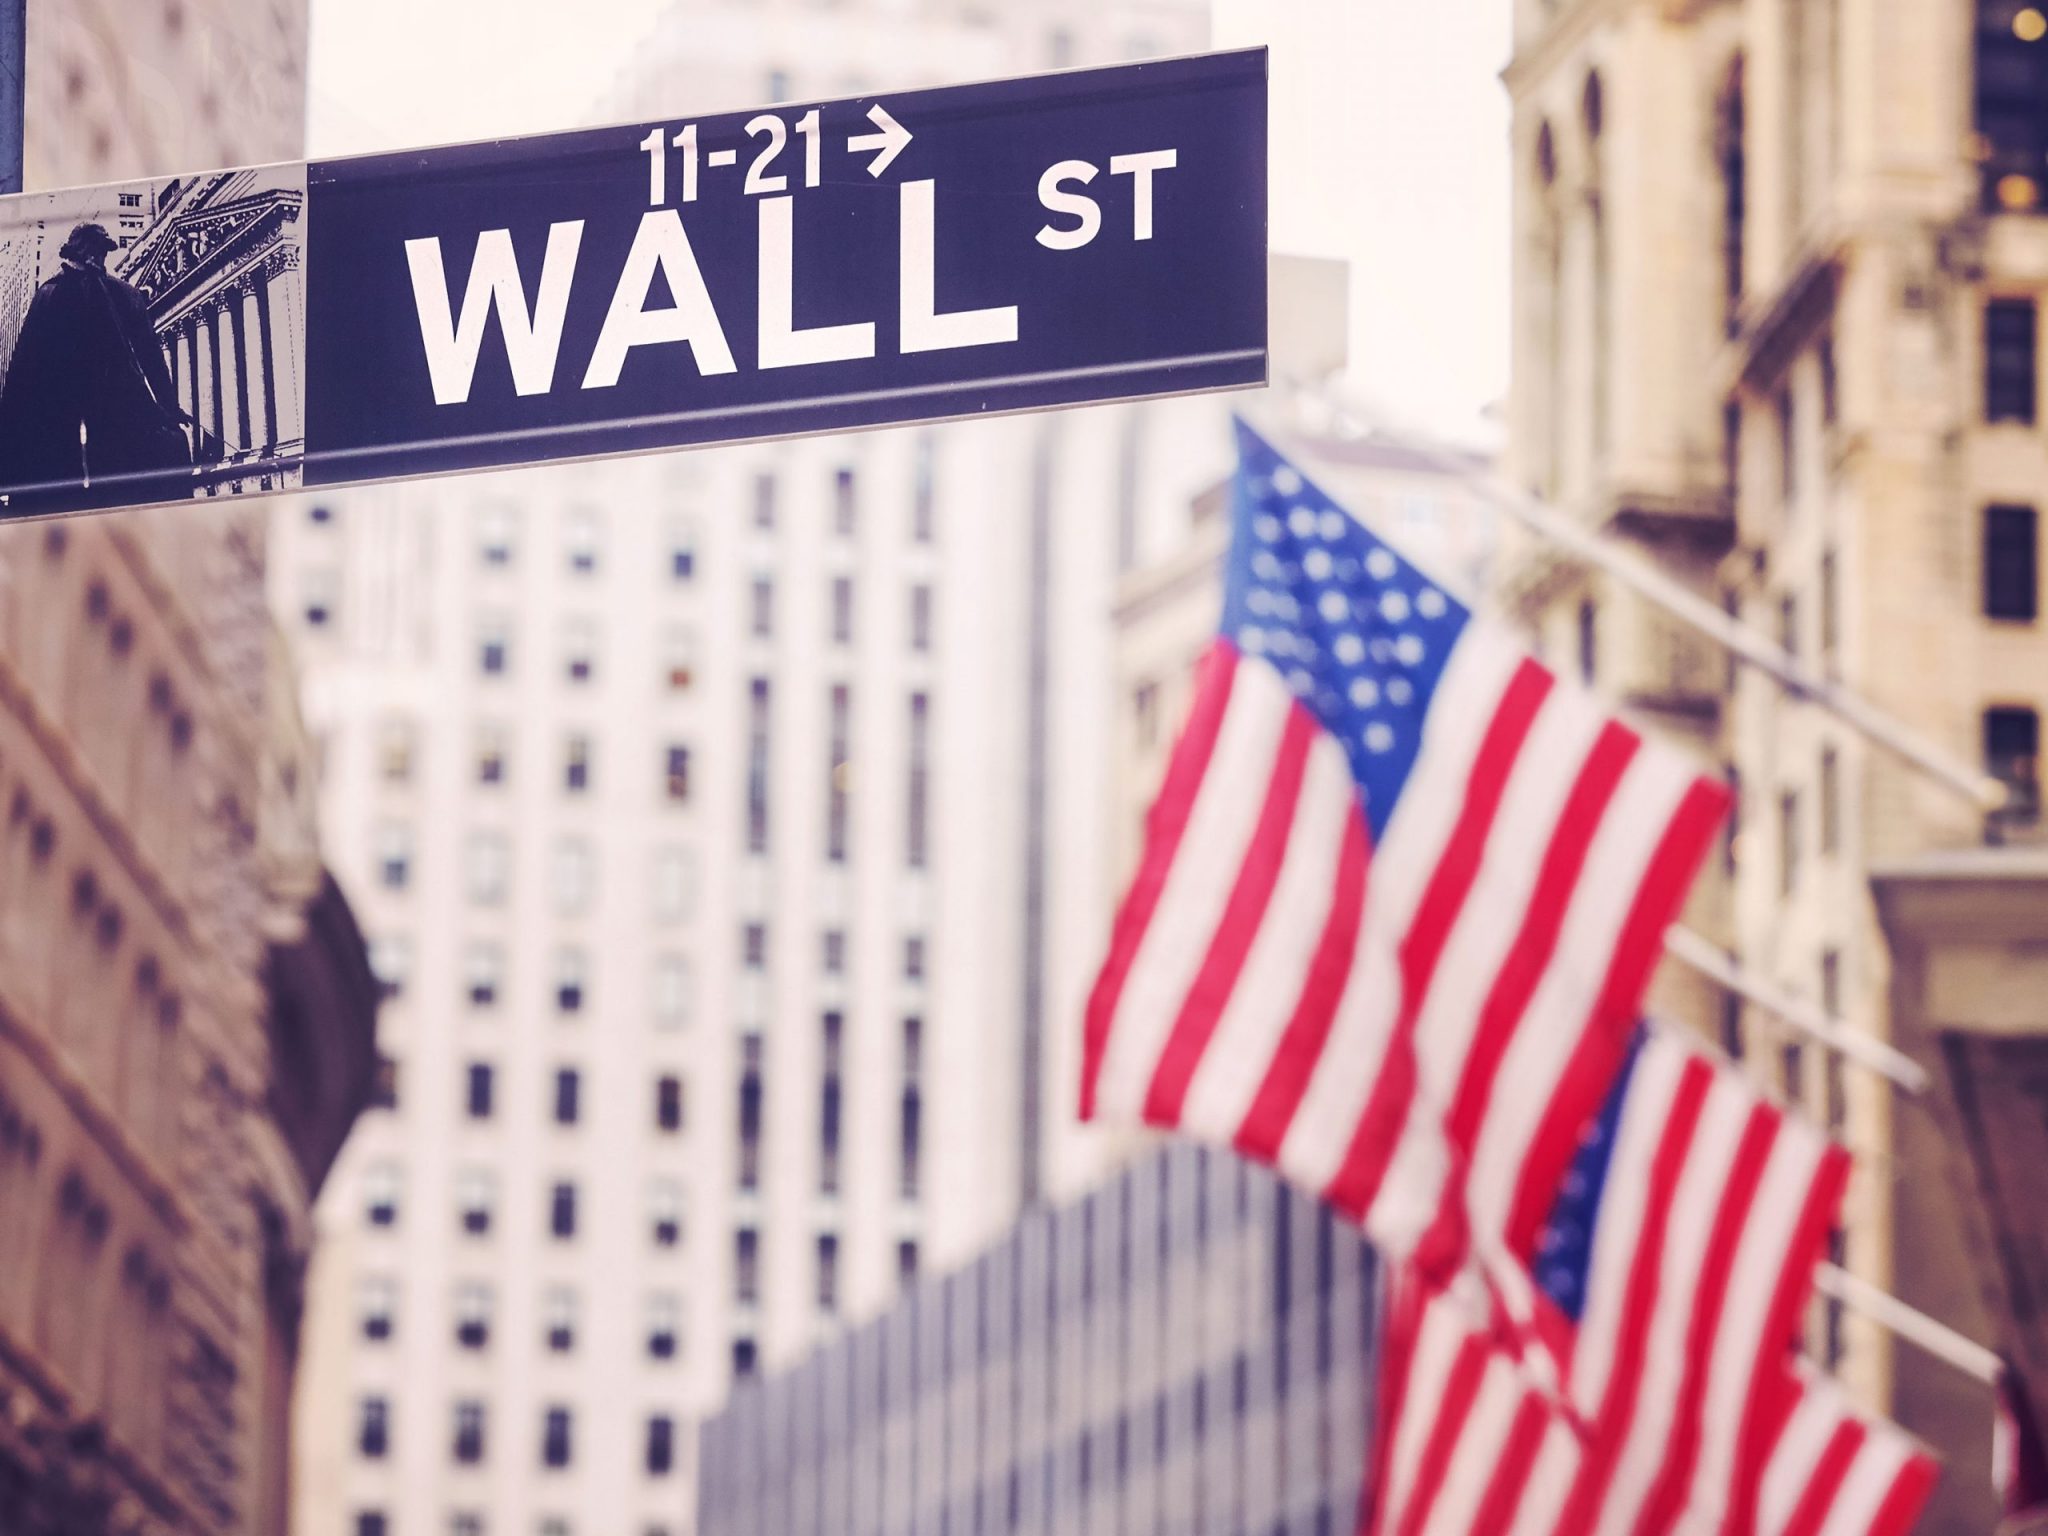 Wall Street: Ανησυχίες προκαλεί η Fed, παραμένουν οι αμφιβολίες για τα επιτόκια